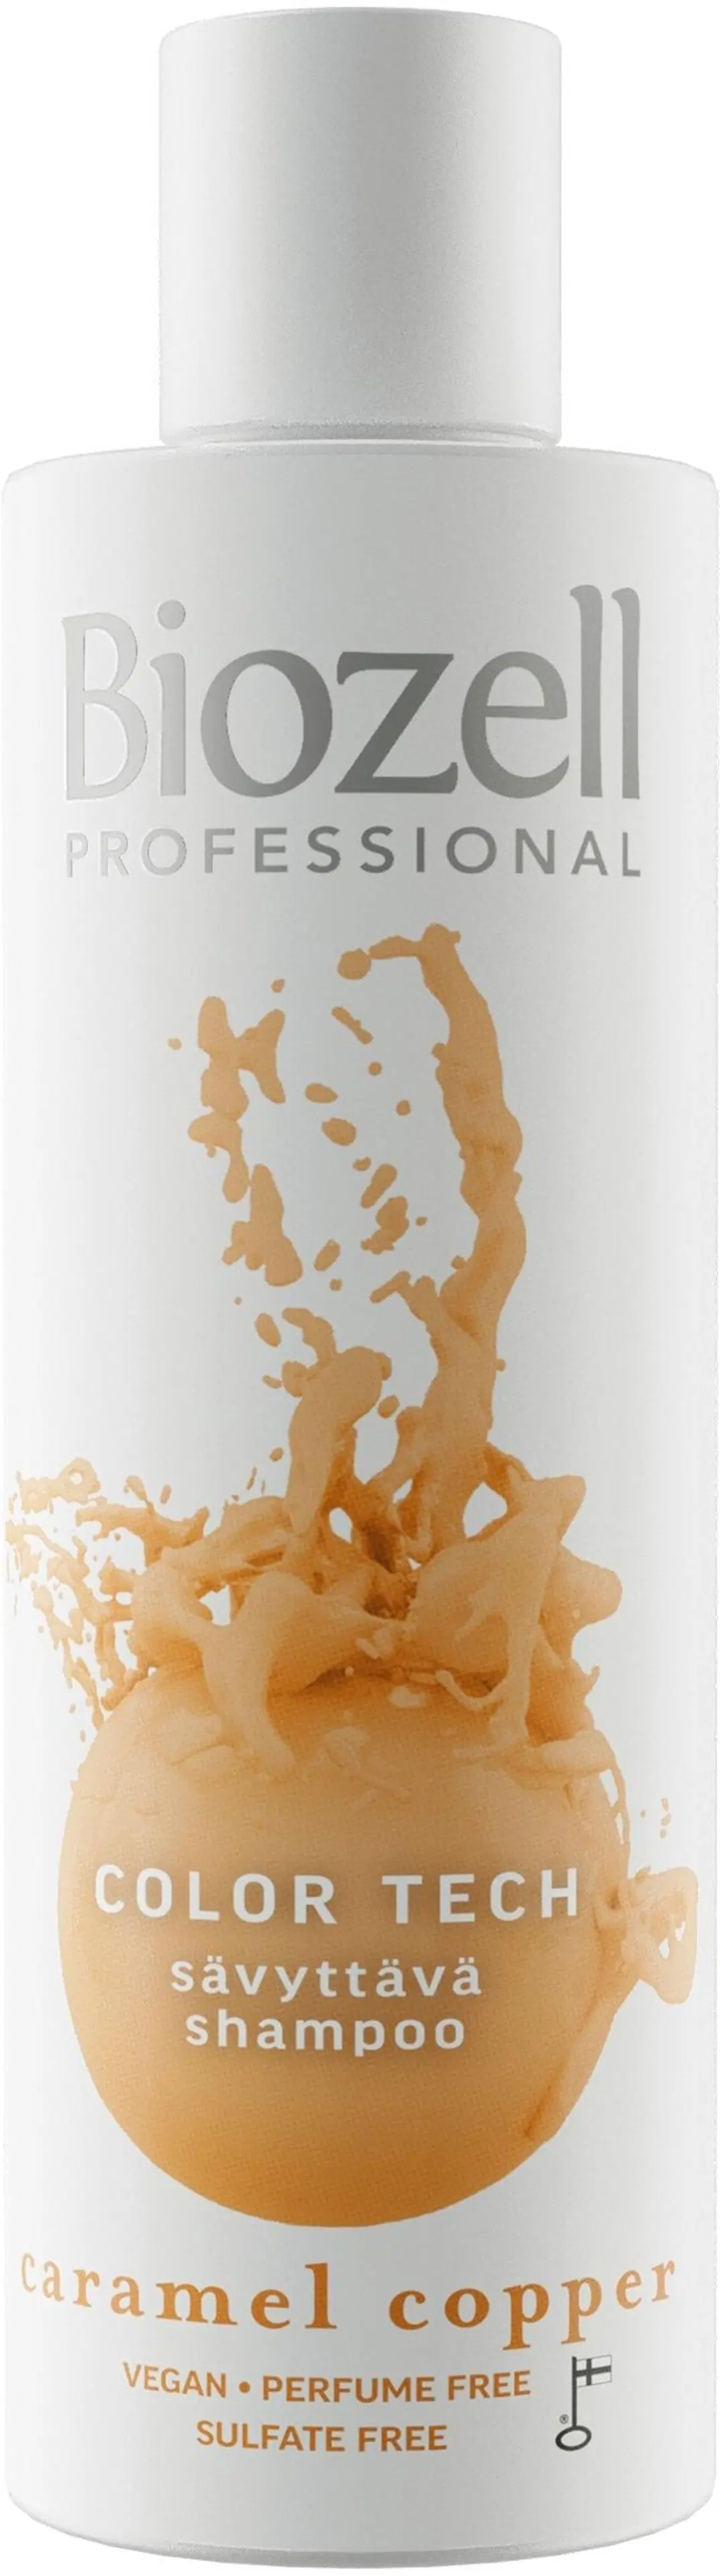 Biozell Professional Color Tech Sävyttävä shampoo Caramel Copper 200ml